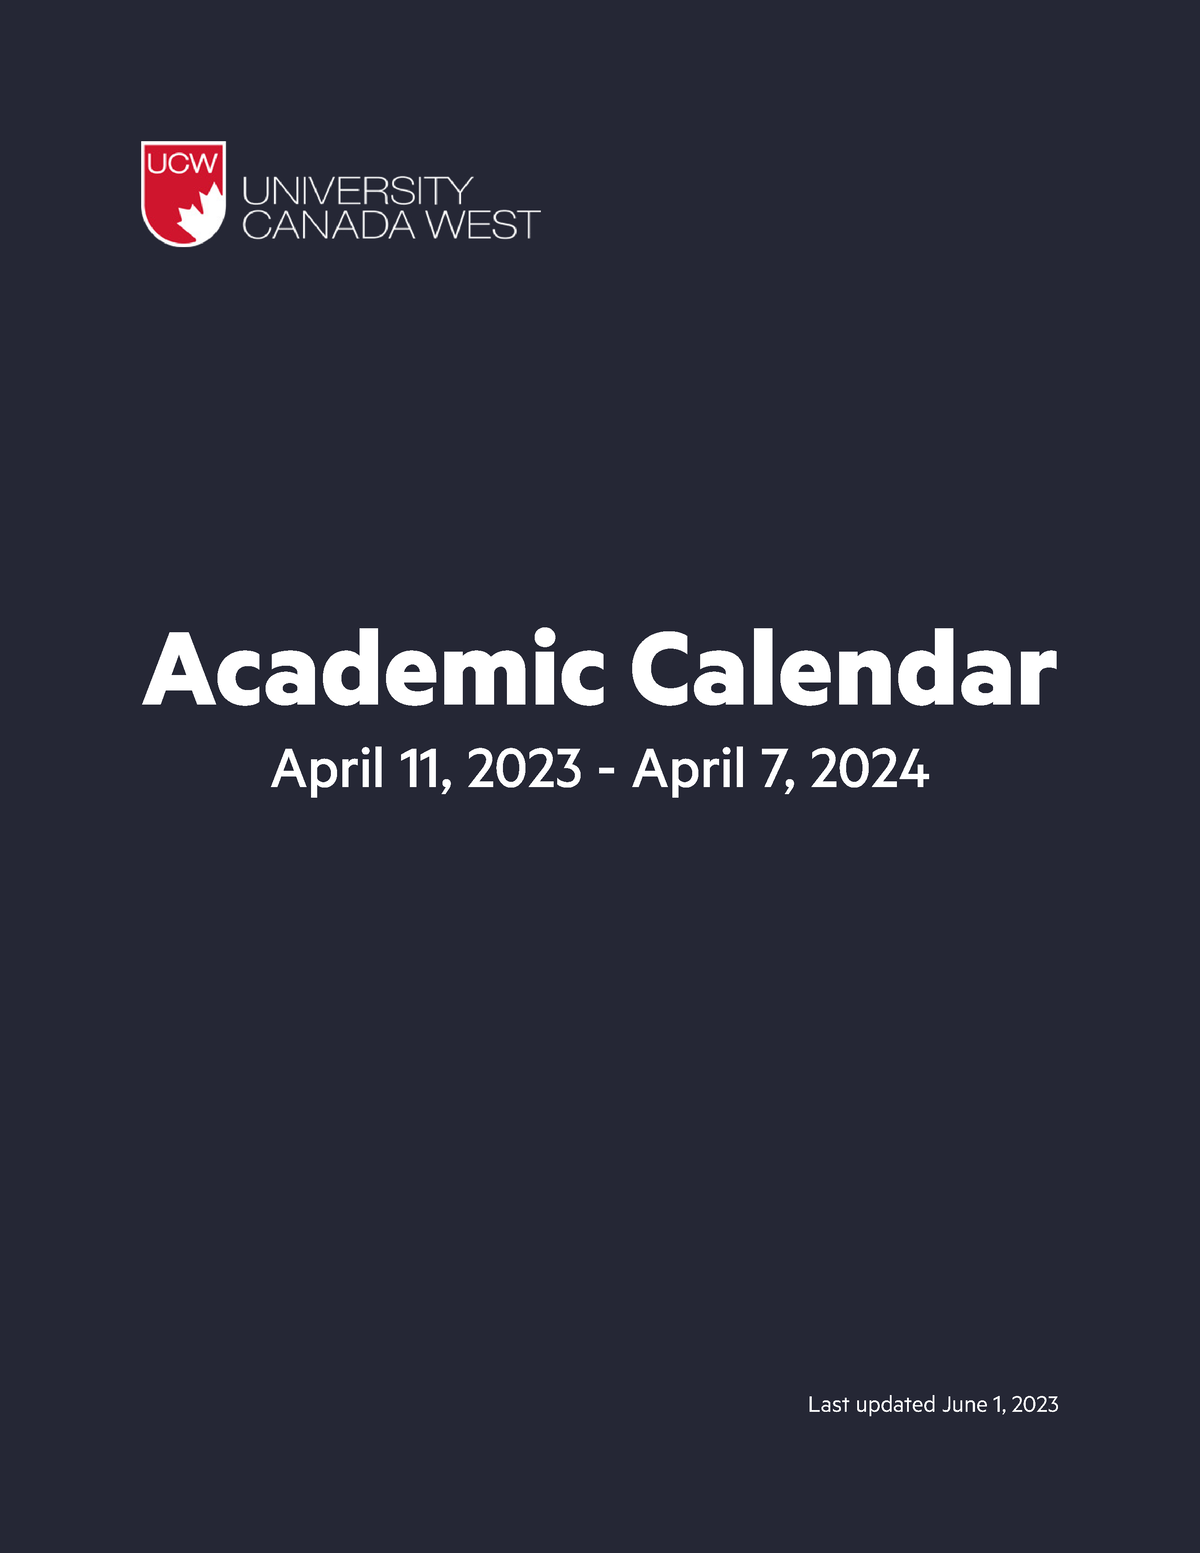 UCW Academic Calendar 2023 2024 06 01 2023 Academic Calendar April 11